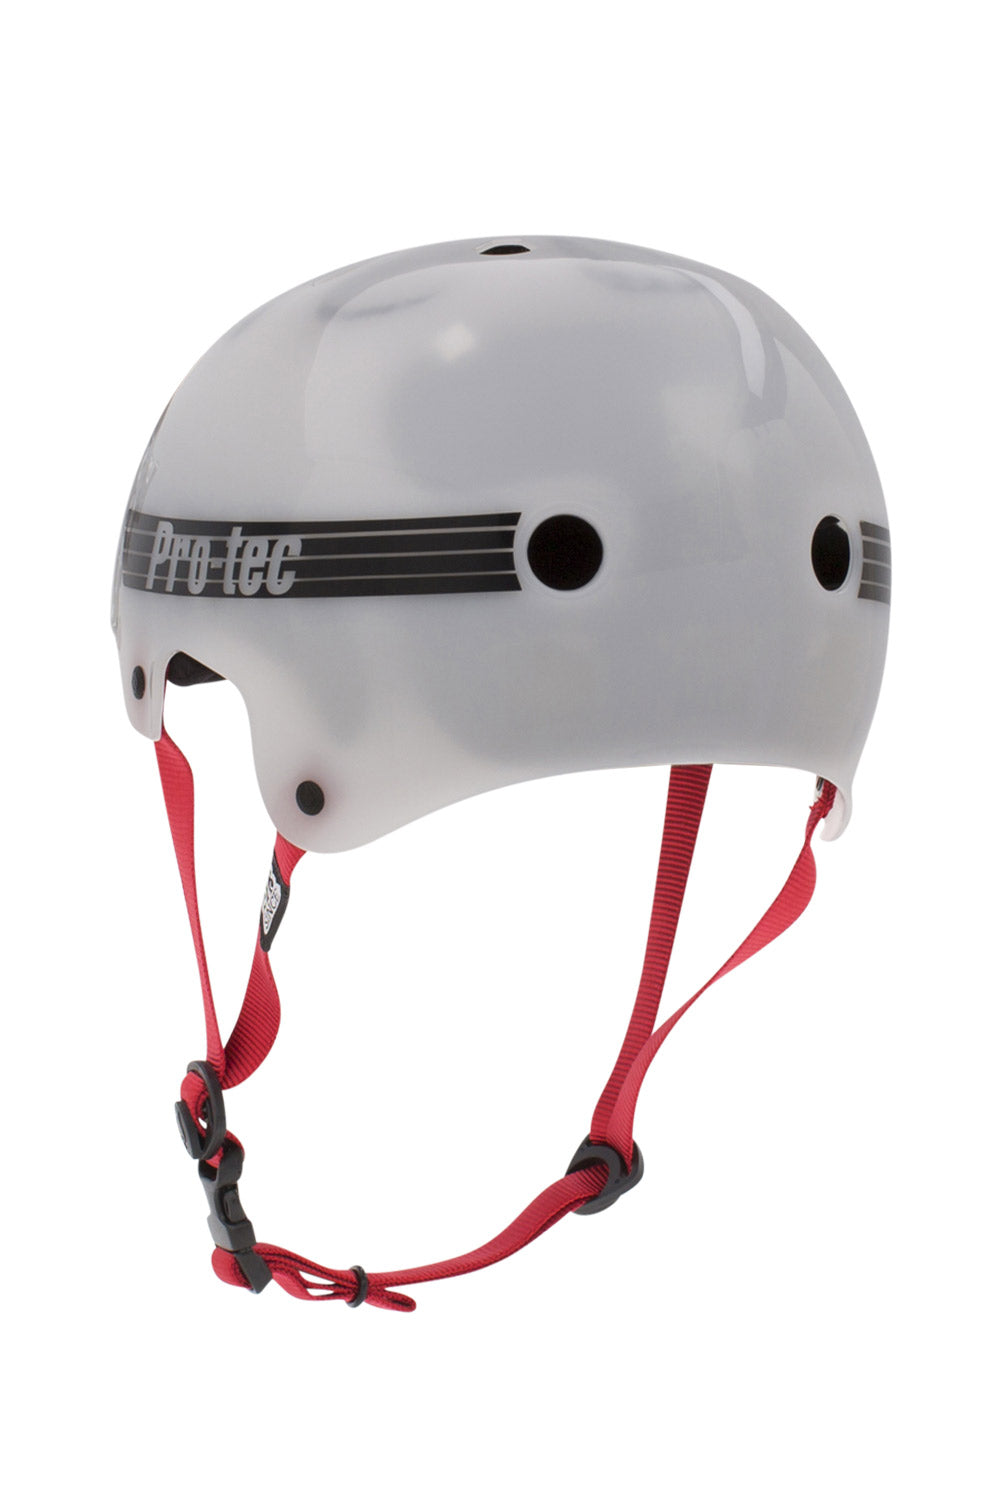 Shop Pro-Tec | Pro-Tec Classic Bucky Lasek Skate Helmet